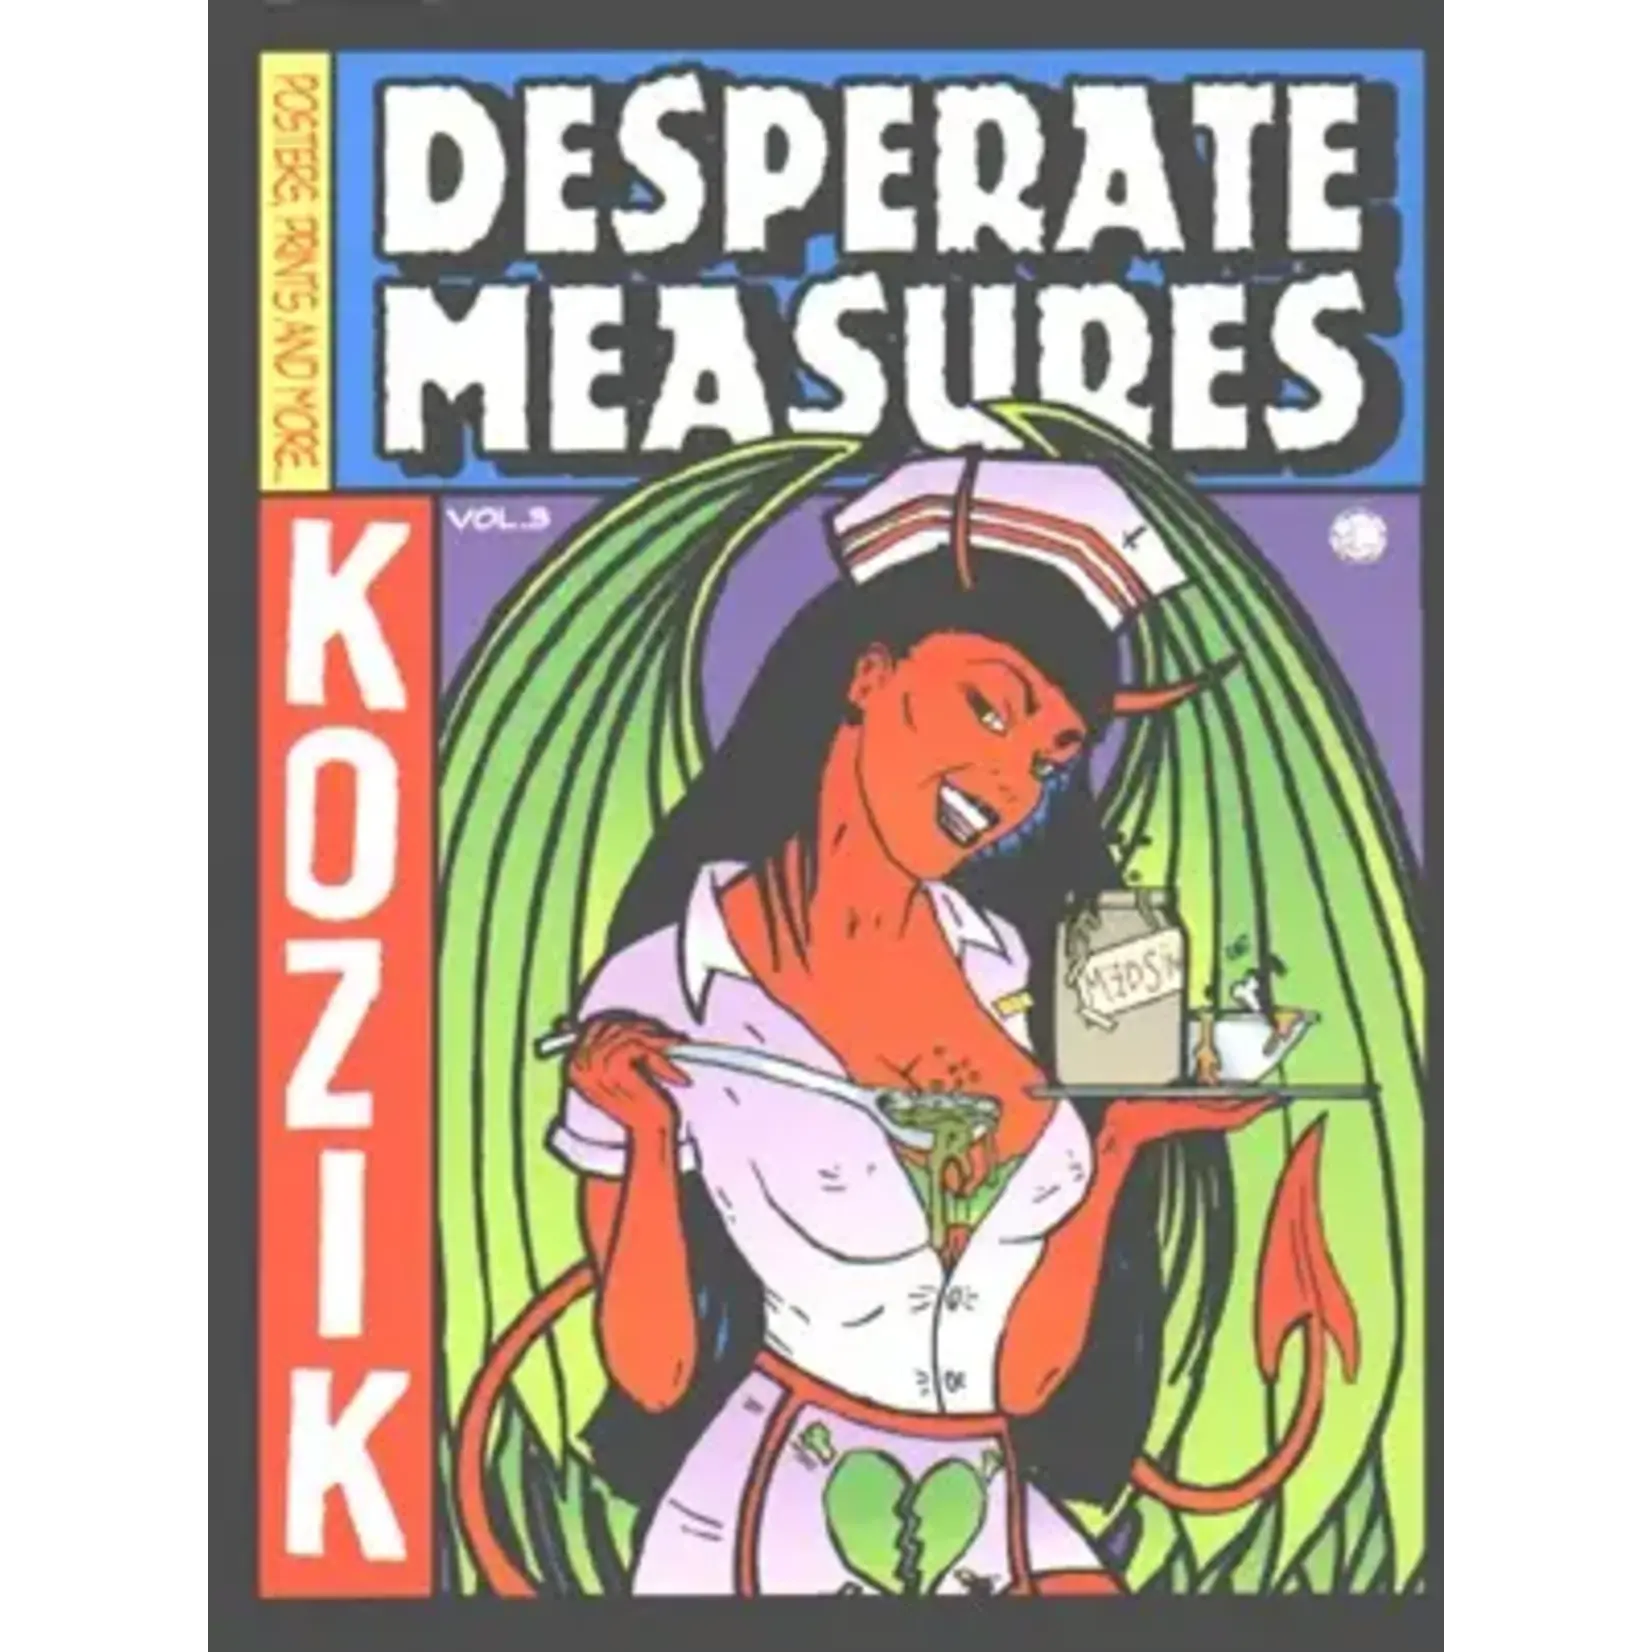 Frank Kozik - Desperate Measures Empty Pleasures Vol. 3 - Hardback (NEW)